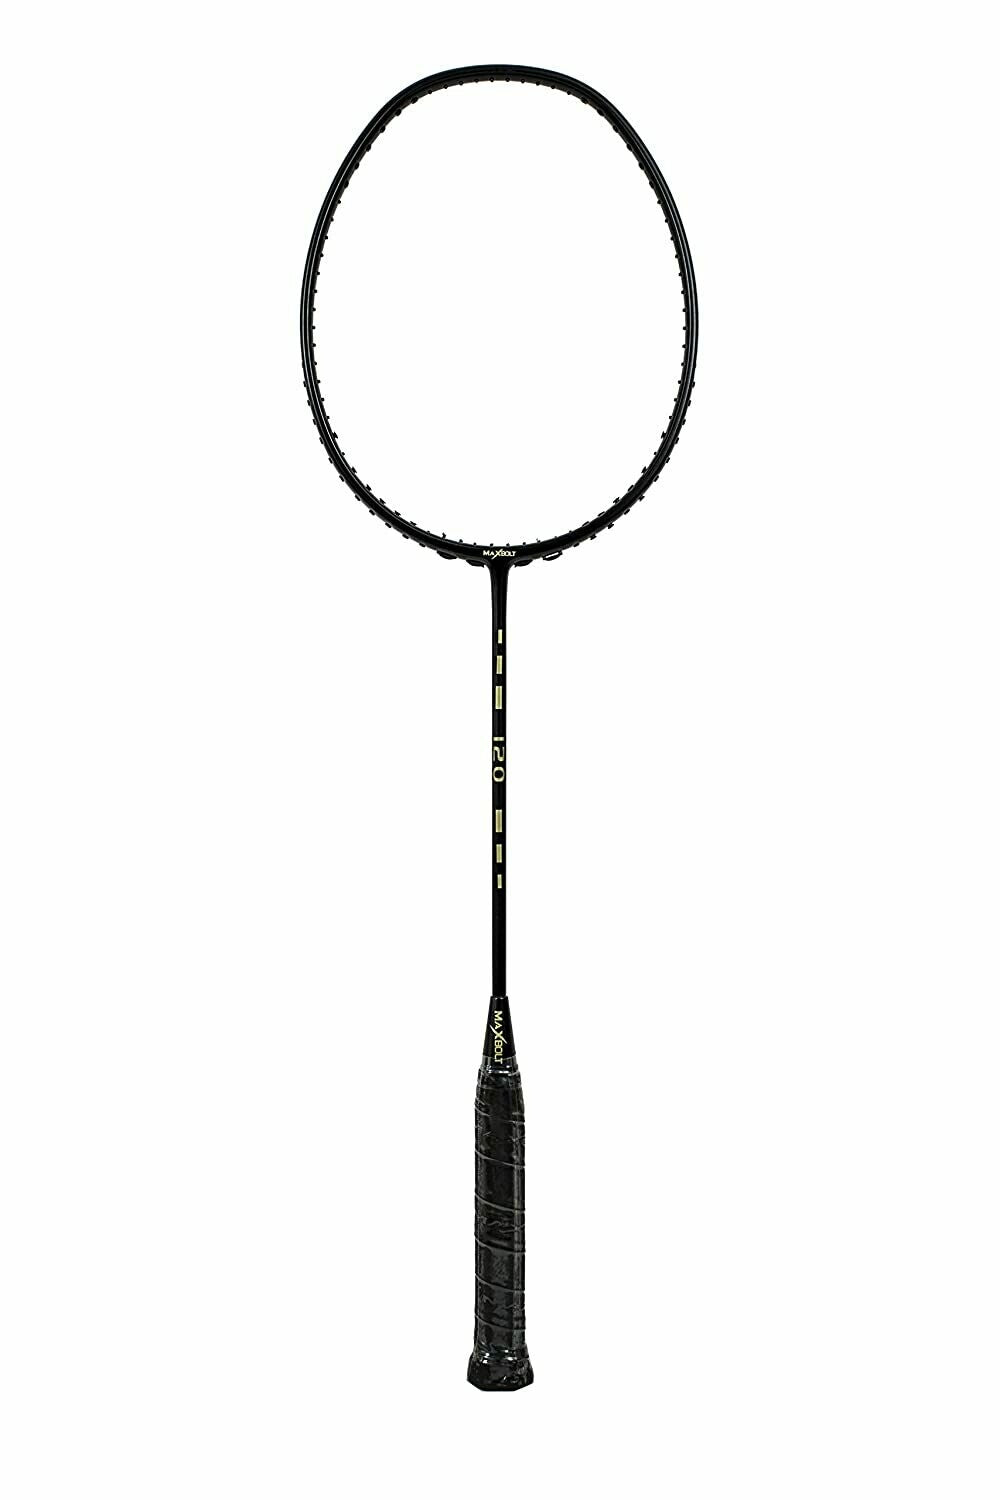 Maxbolt Training Badminton Racket - 120grams